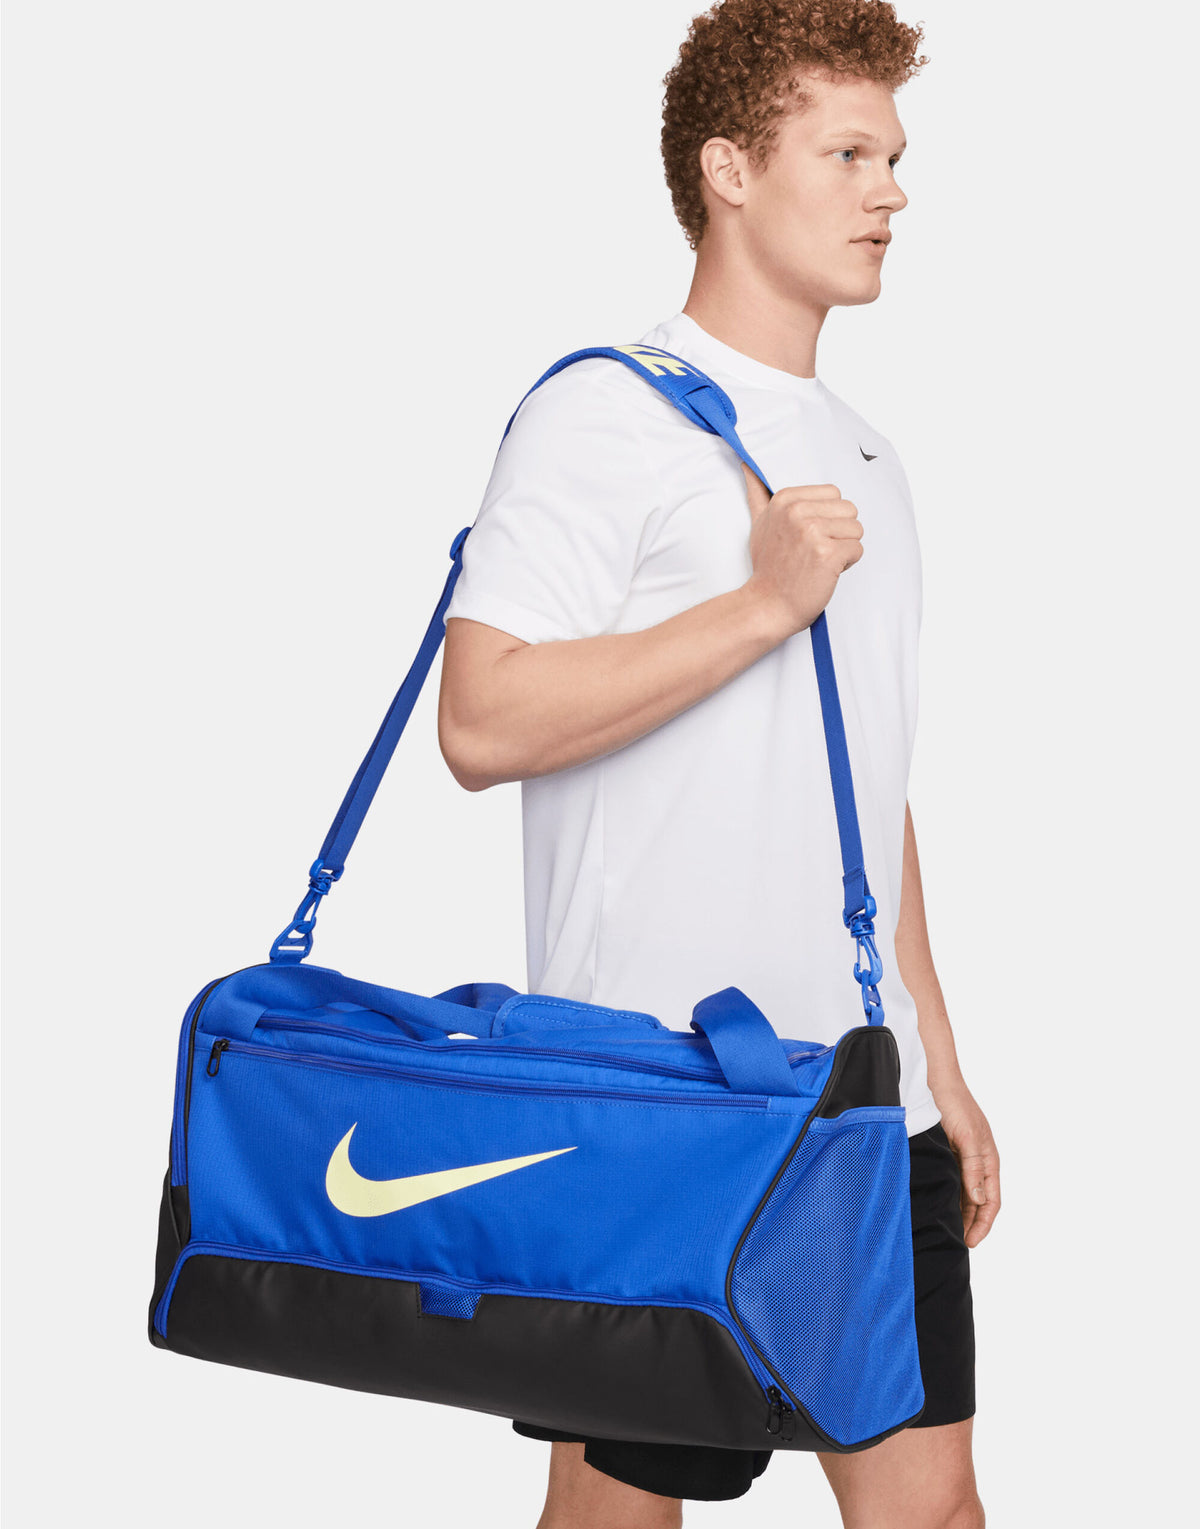 Nike Brasilia Training Duffle Bag (60L)